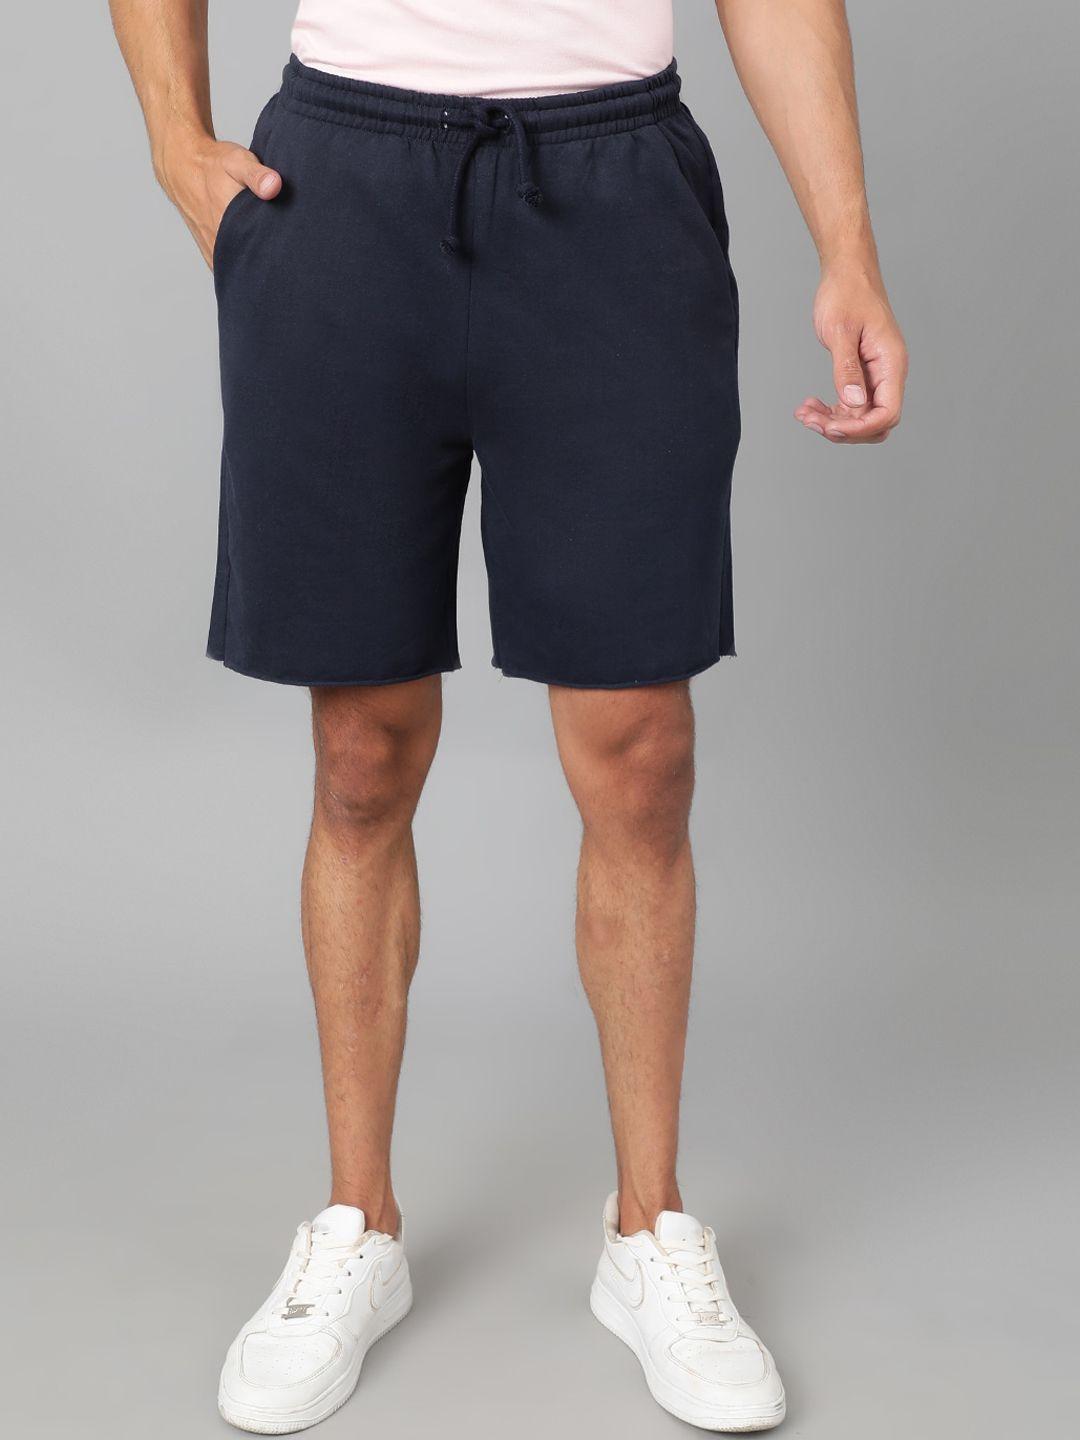 kotty men navy blue low-rise running sports shorts